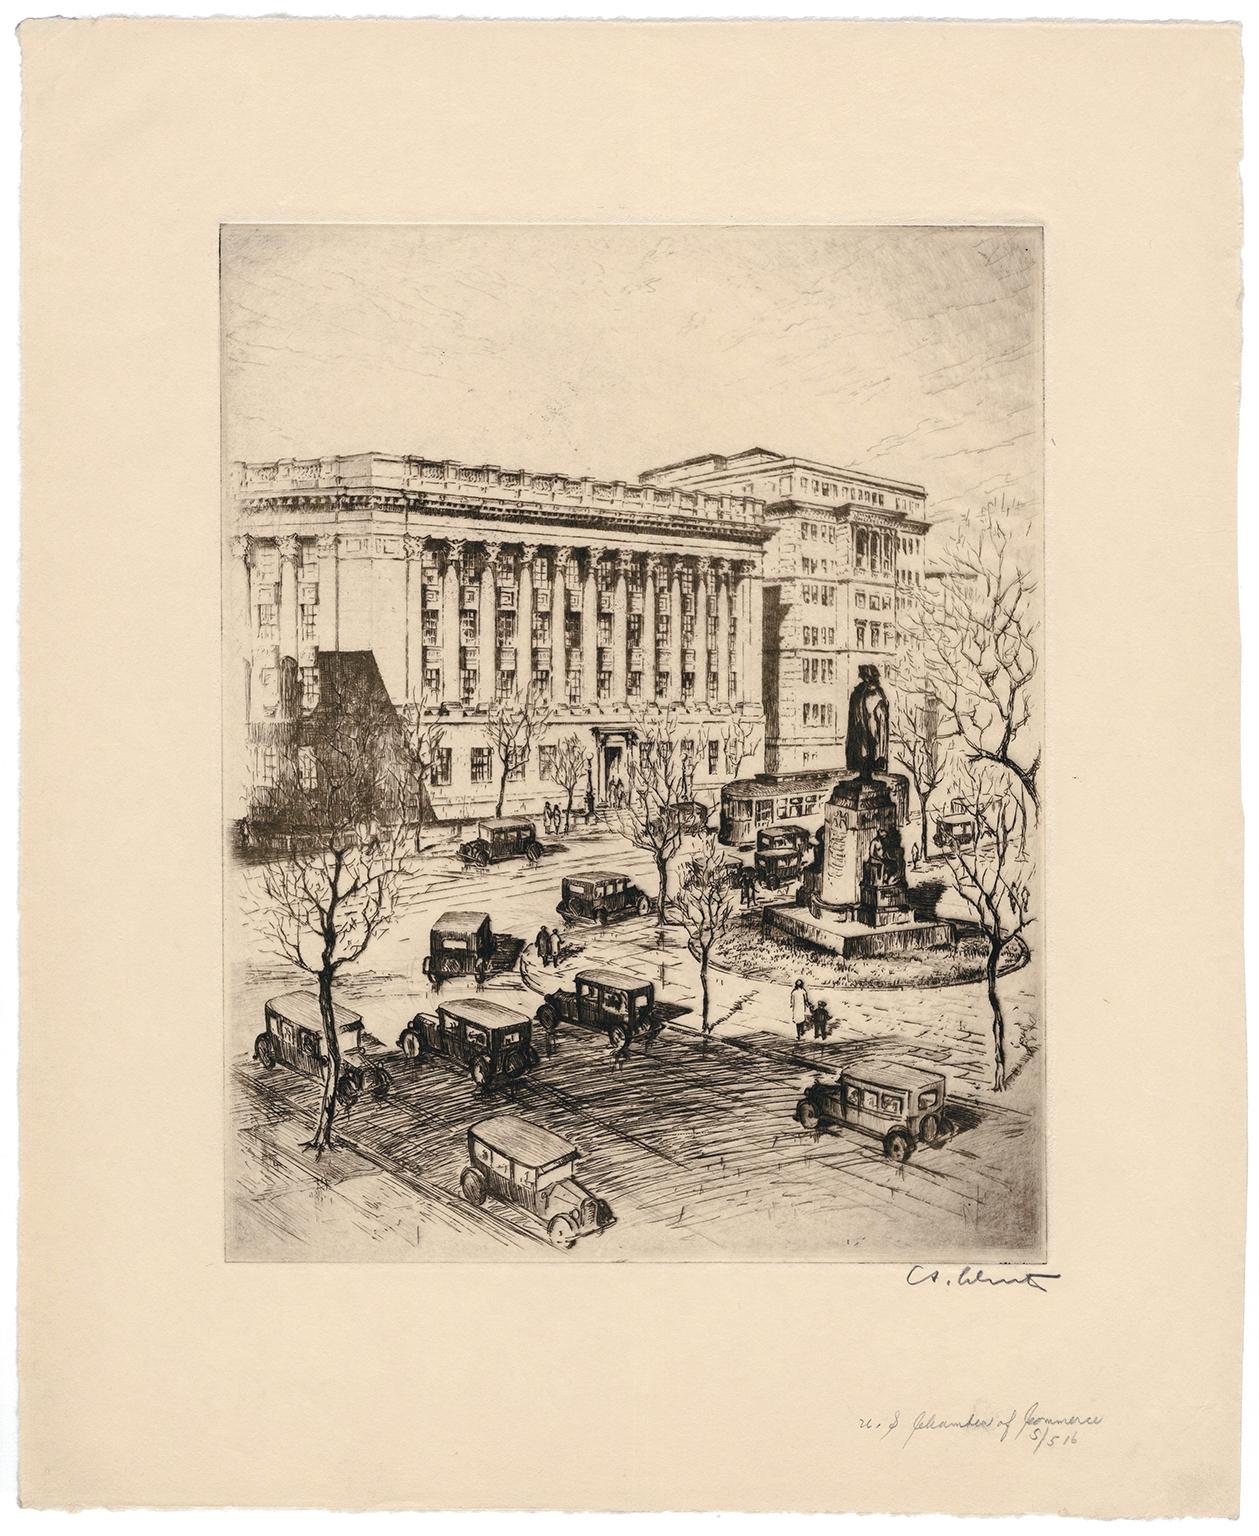 'U.S. Chamber of Commerce' — 1920s Realism, Washington D.C. - Print by Anton Schutz